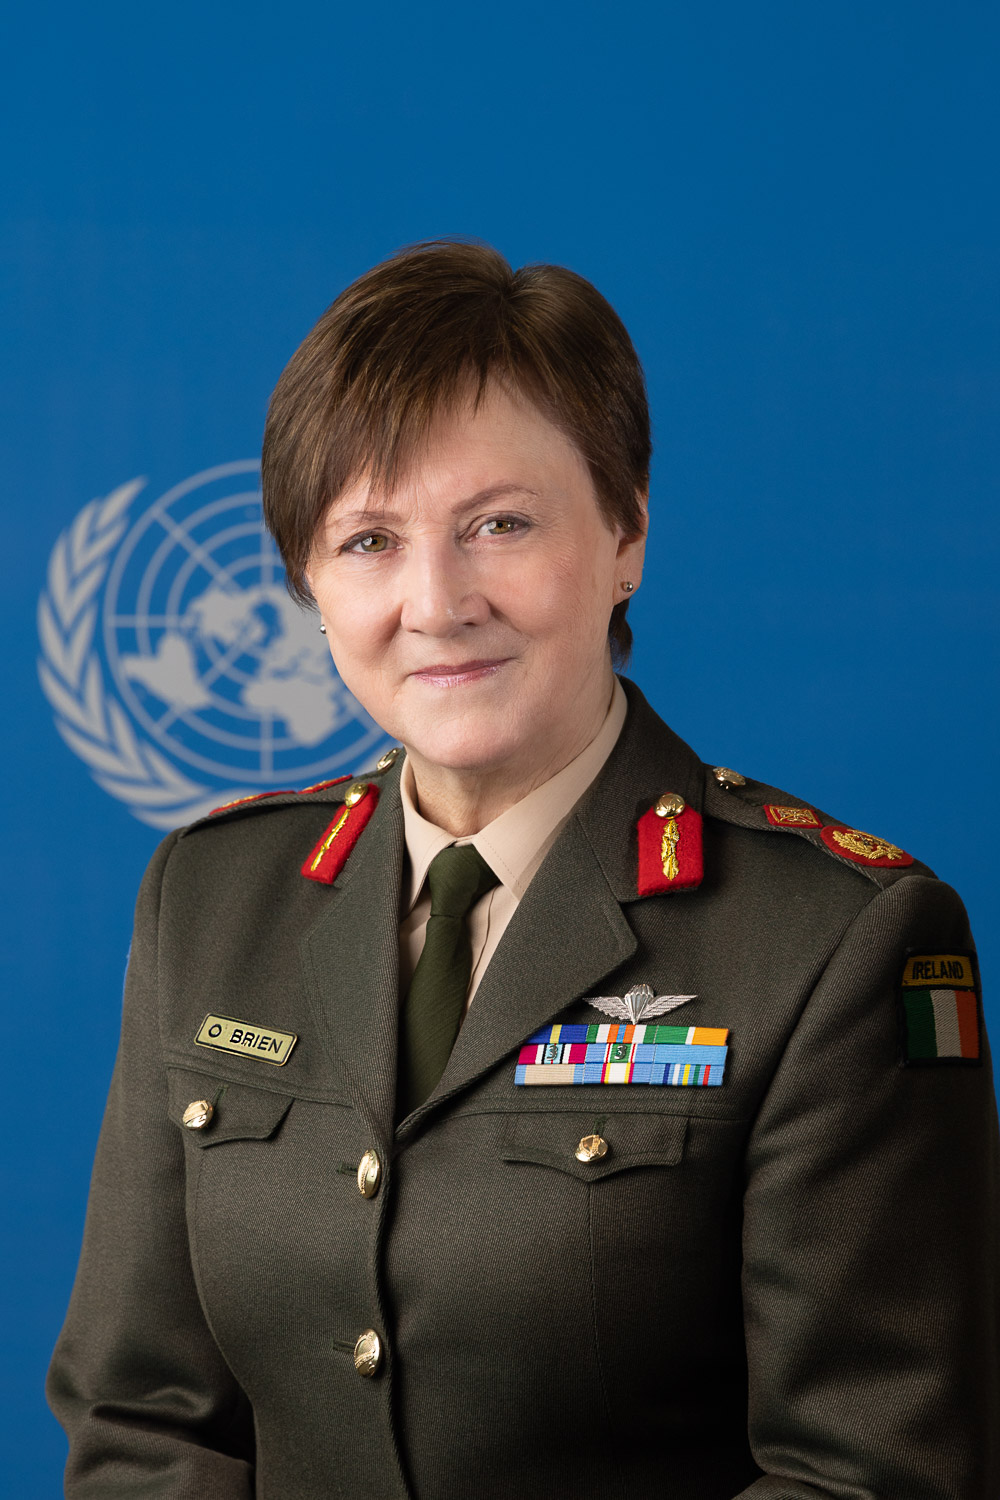 RDJ-sponsored alumni award to be presented to UN military adviser